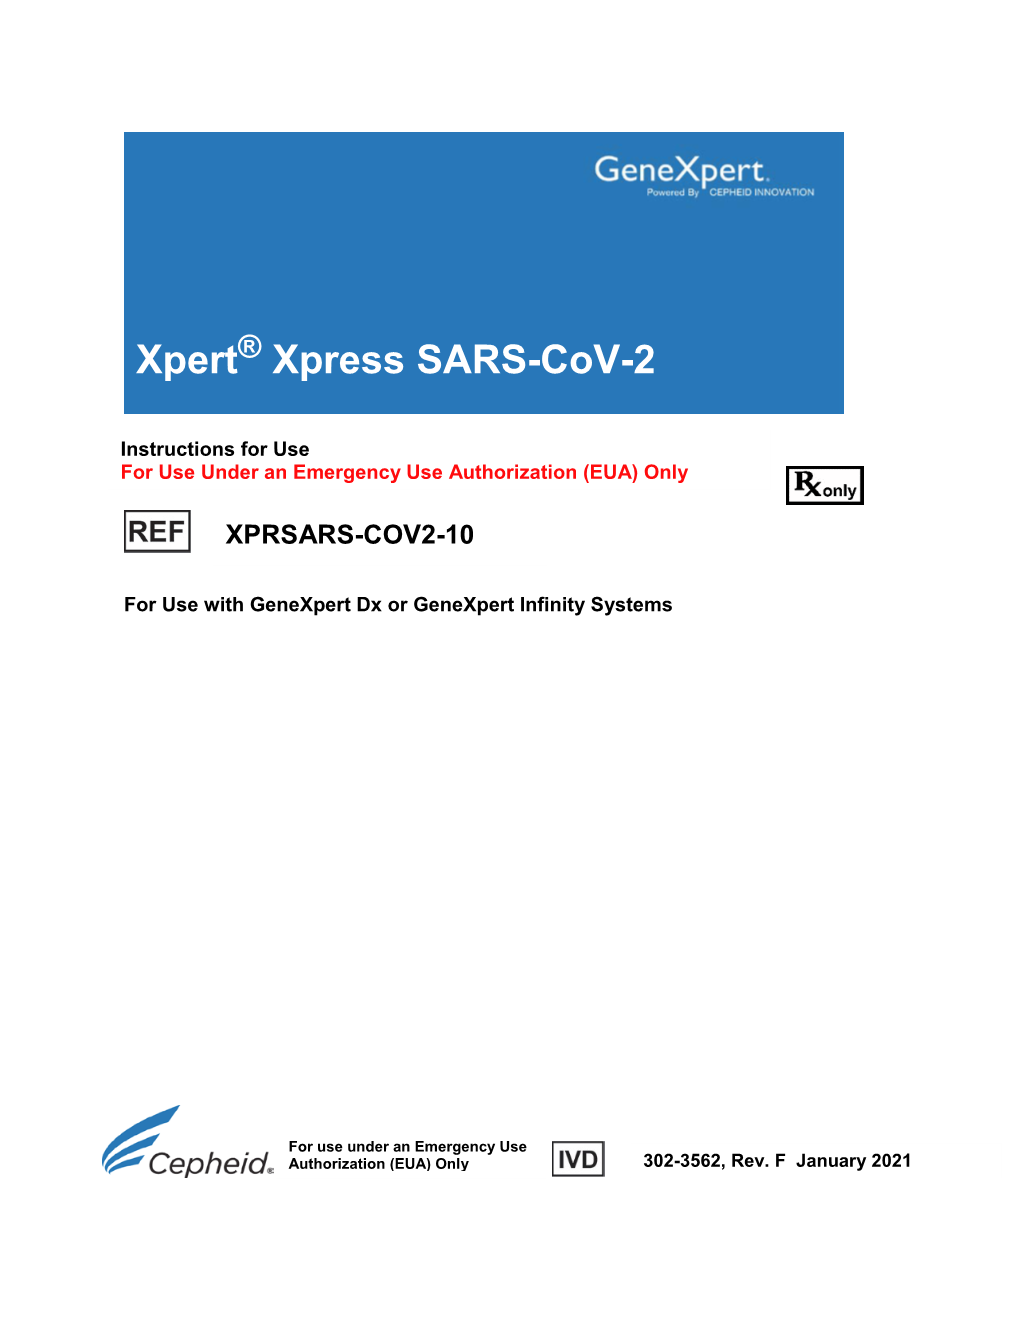 Xpert Xpress SARS-Cov-2